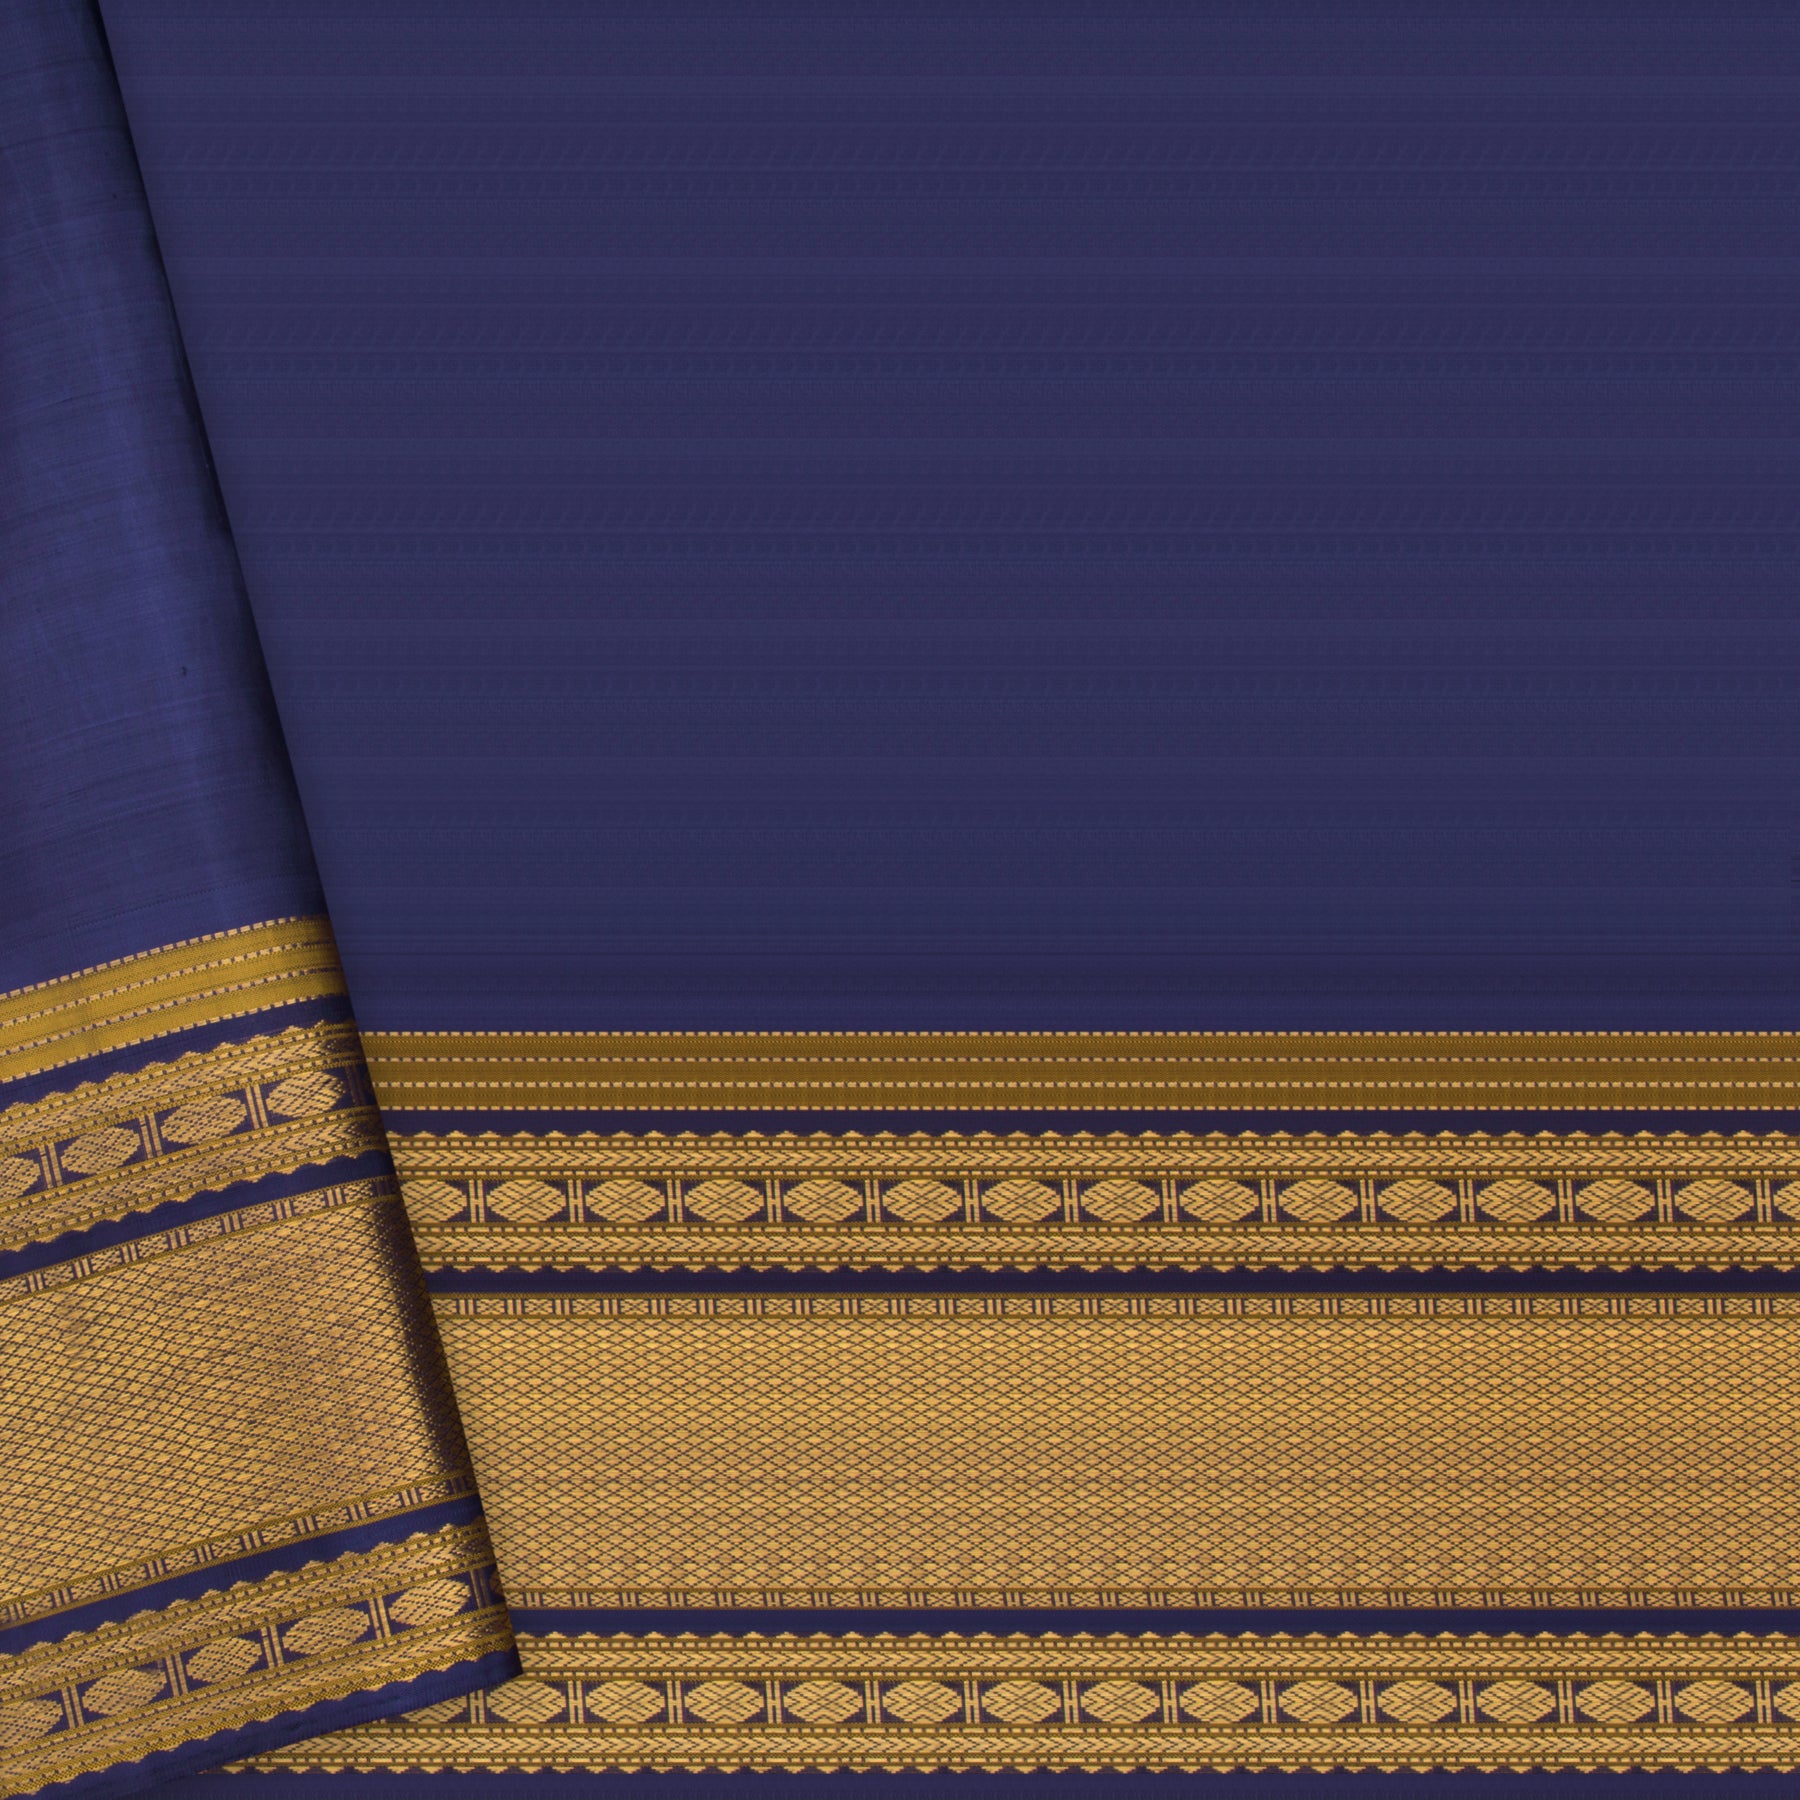 Kanakavalli Kanjivaram Silk Sari 22-040-HS001-04820 - Blouse View